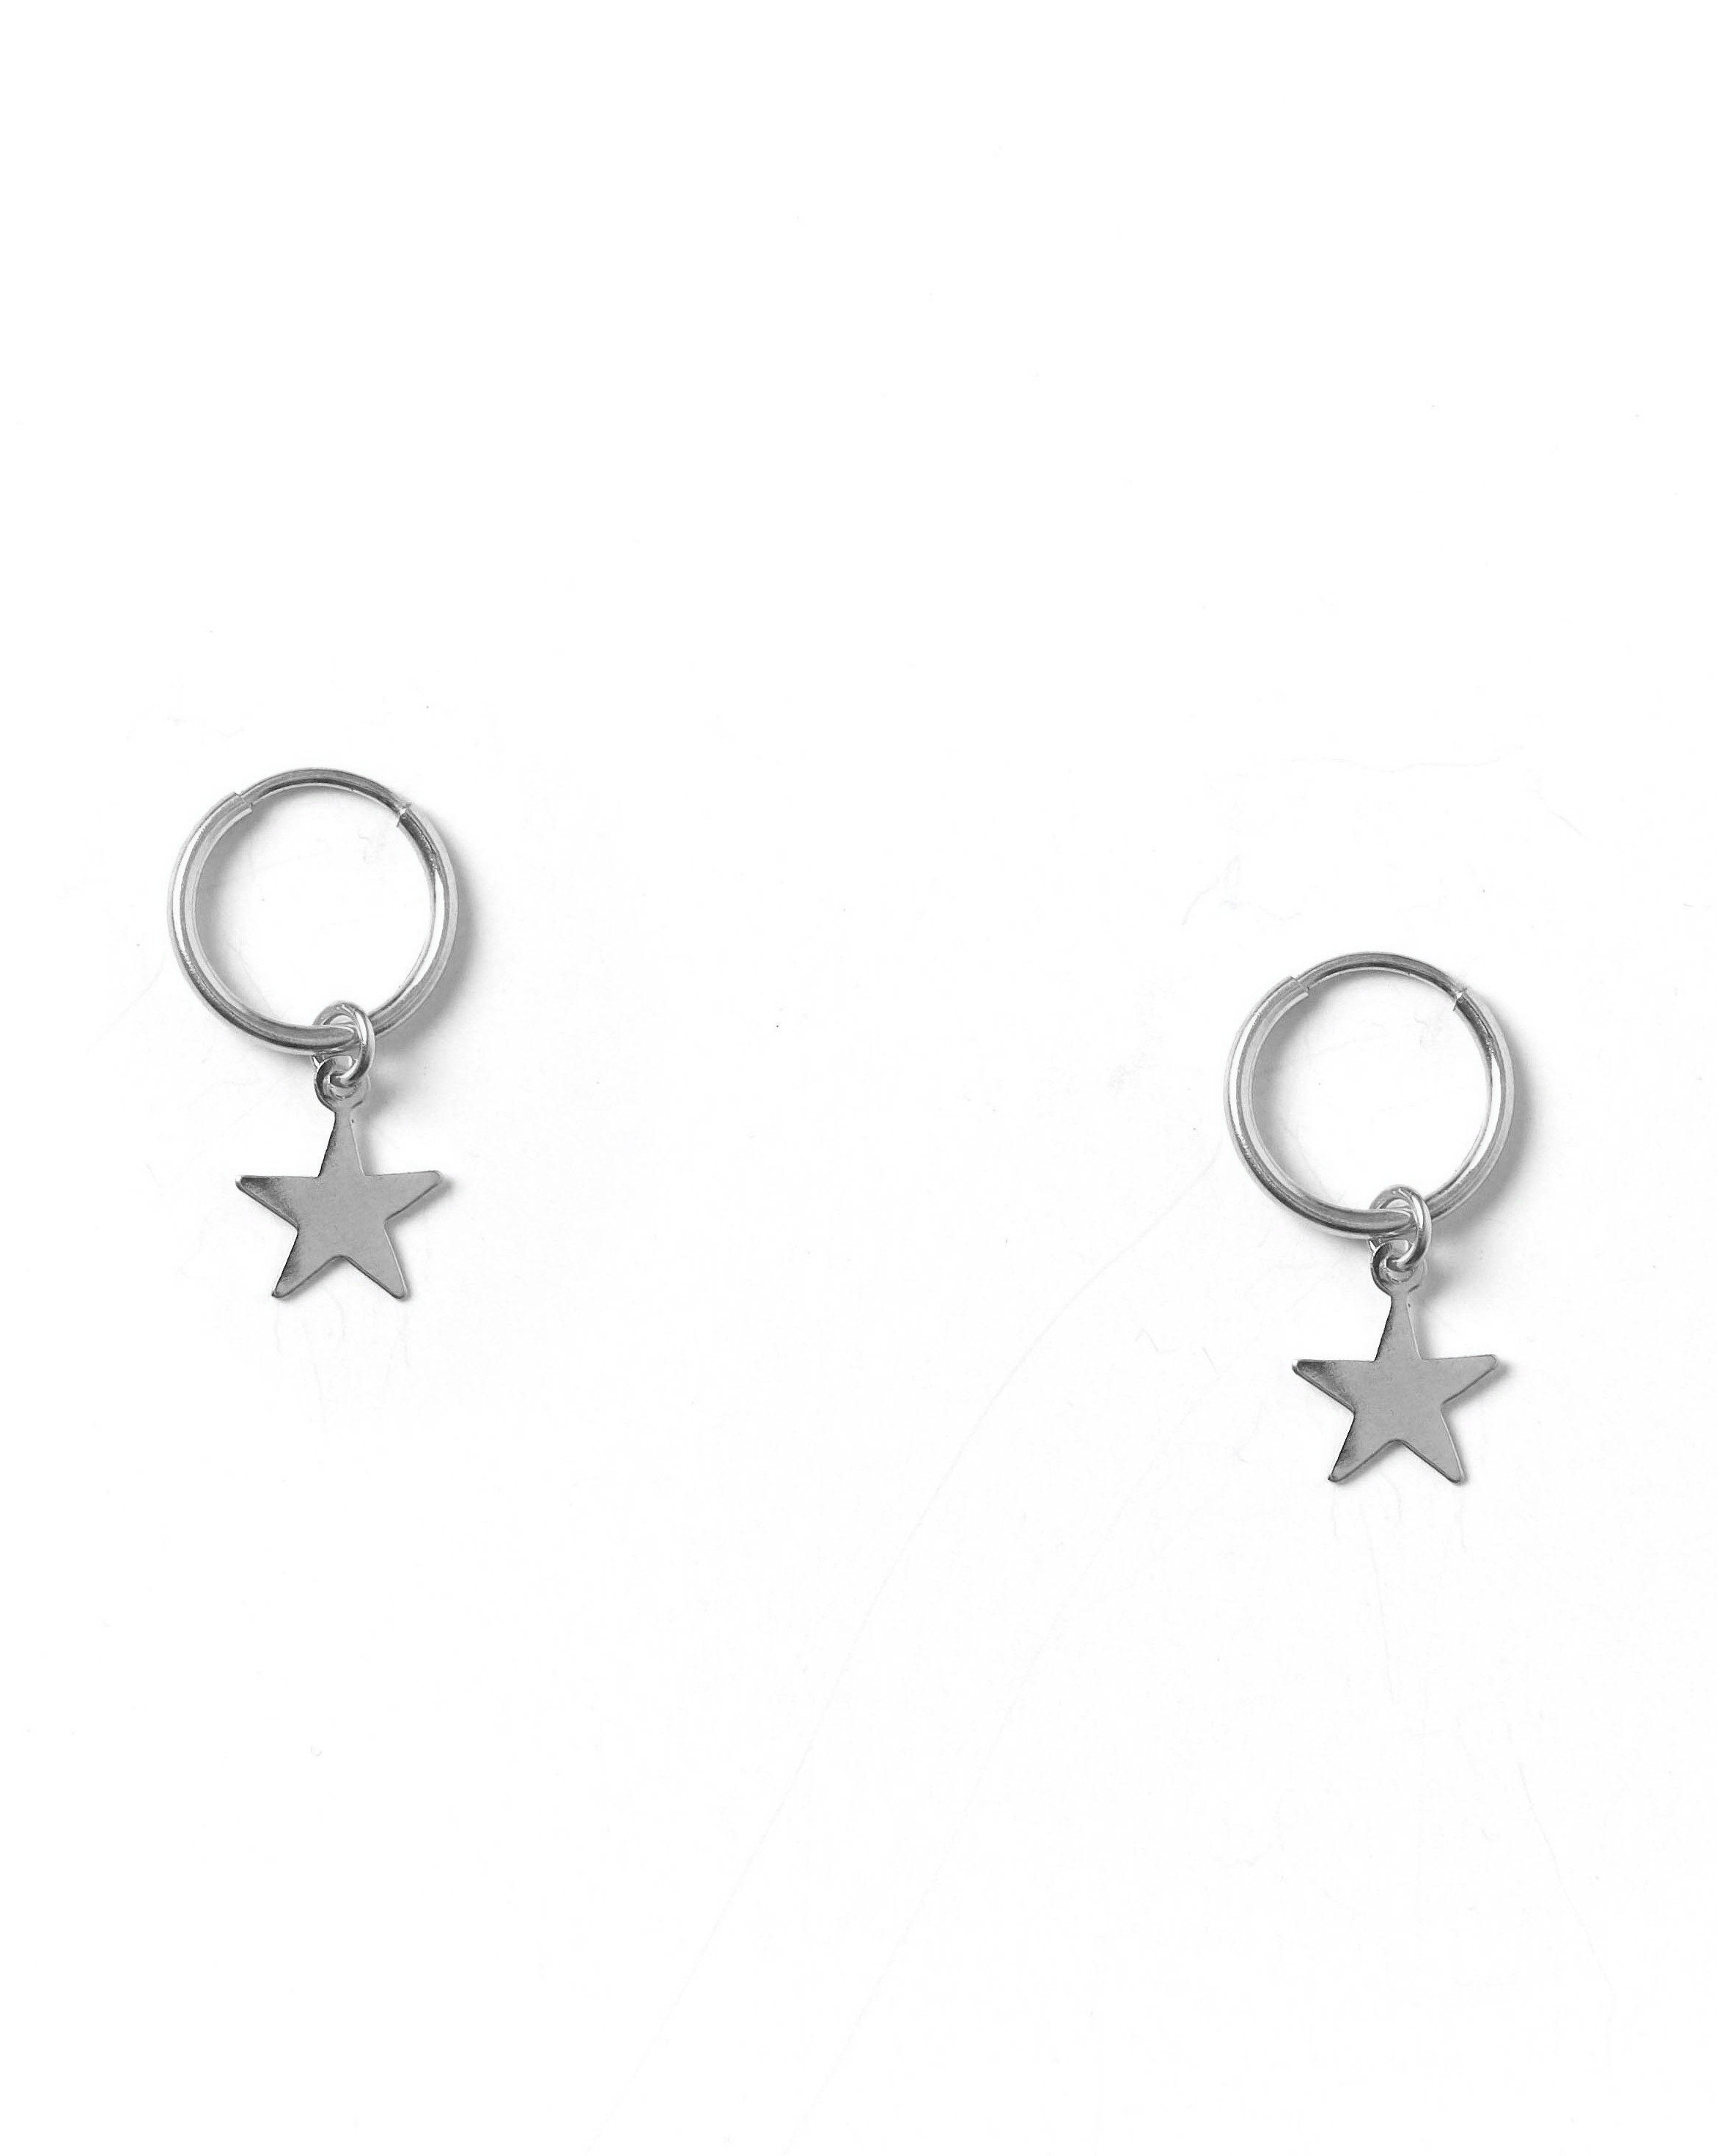 Kisstar Hoop Earrings by KOZAKH. 12mm hoop earrings, crafted in Sterling Silver, featuring a star charm.